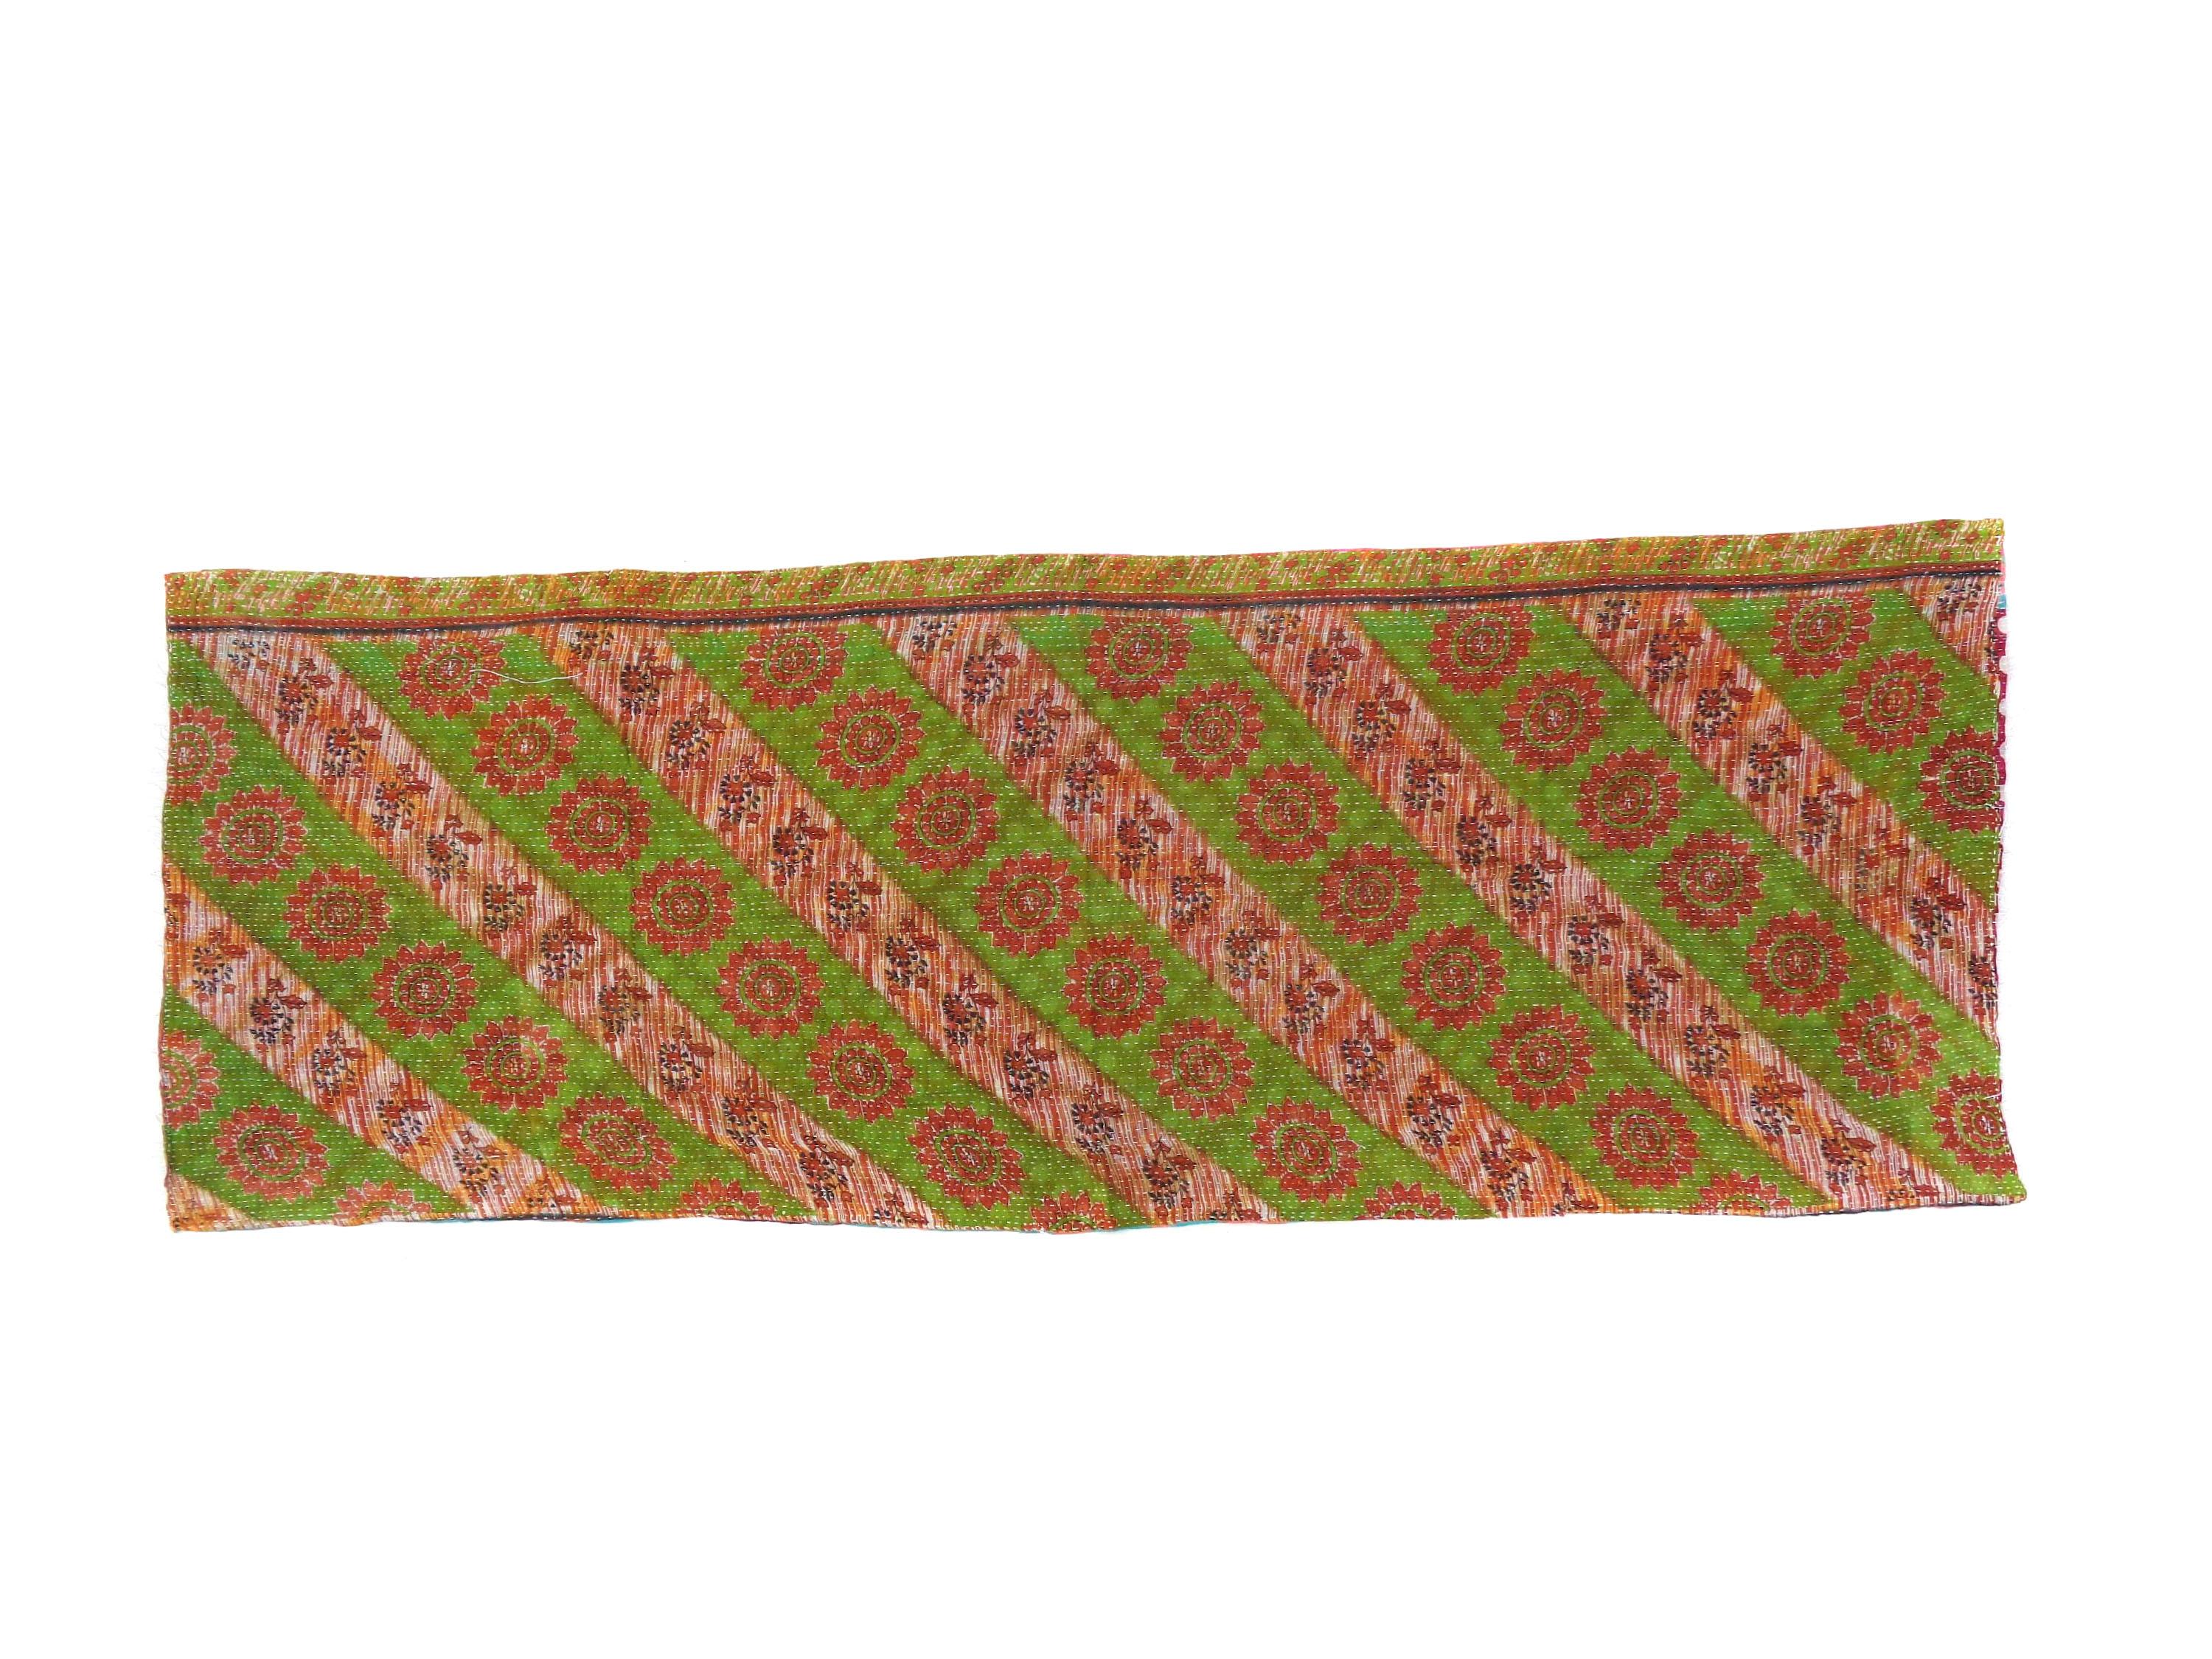 Handmade Indian Cotton Vintage Kantha Scarf Sari Shawl Scarves Stole Neck Wrap SW72